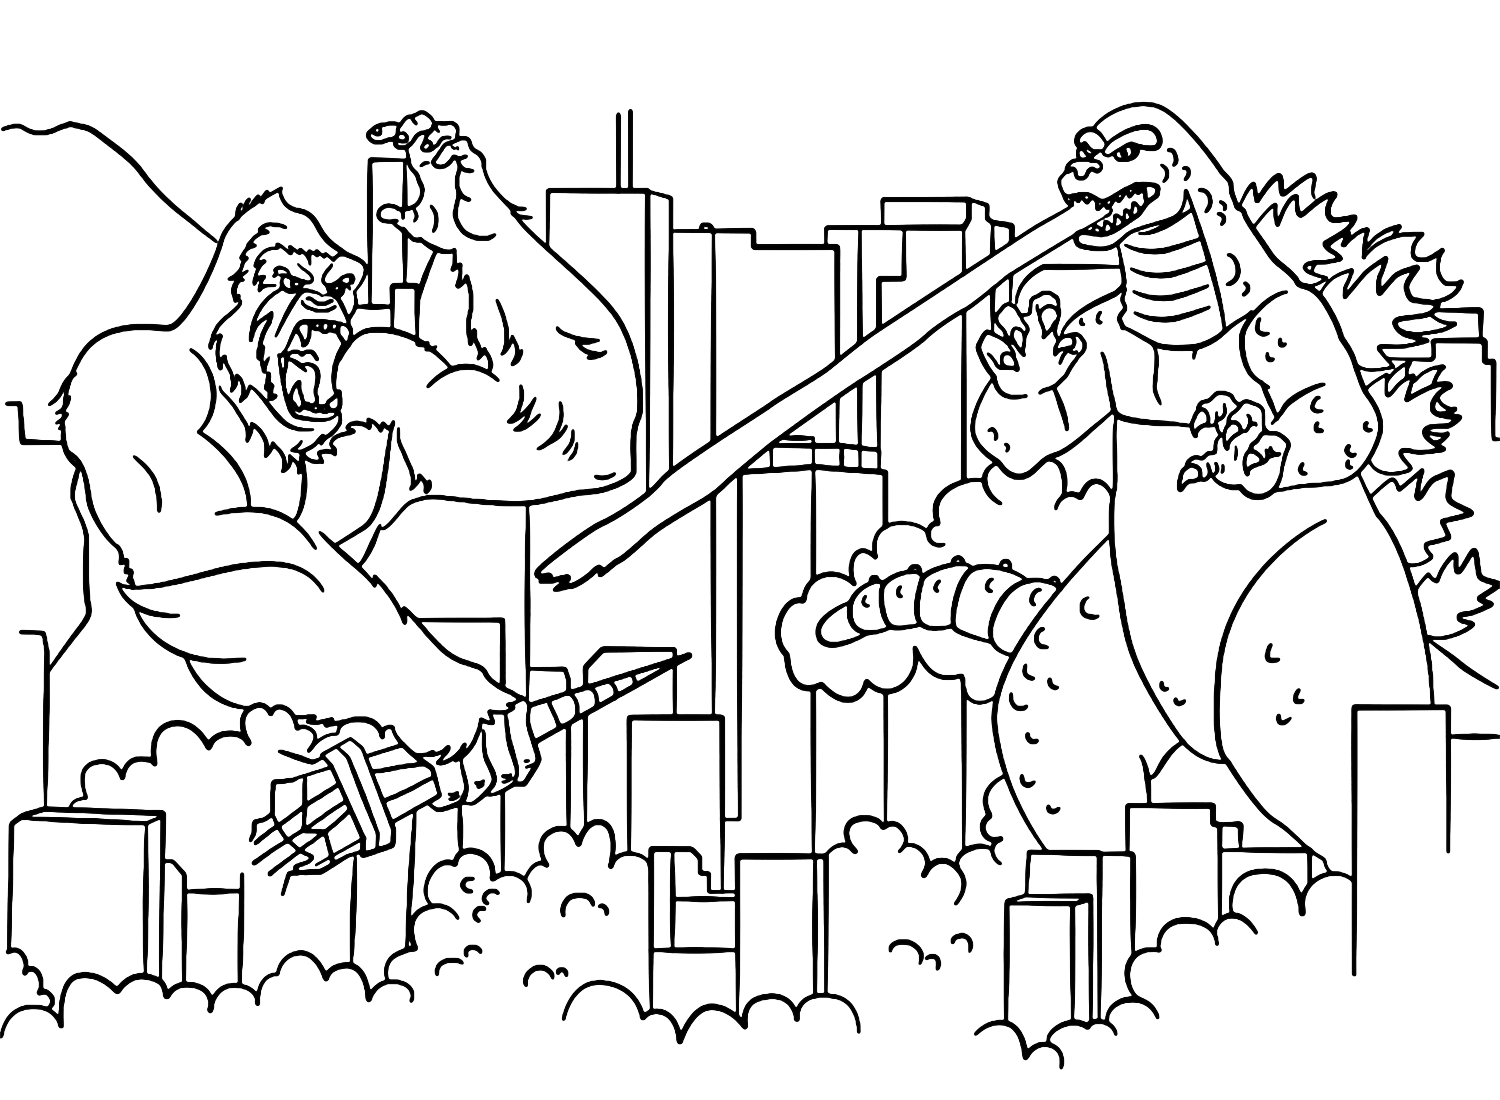 King Kong versus Godzilla kleurplaat van King Kong